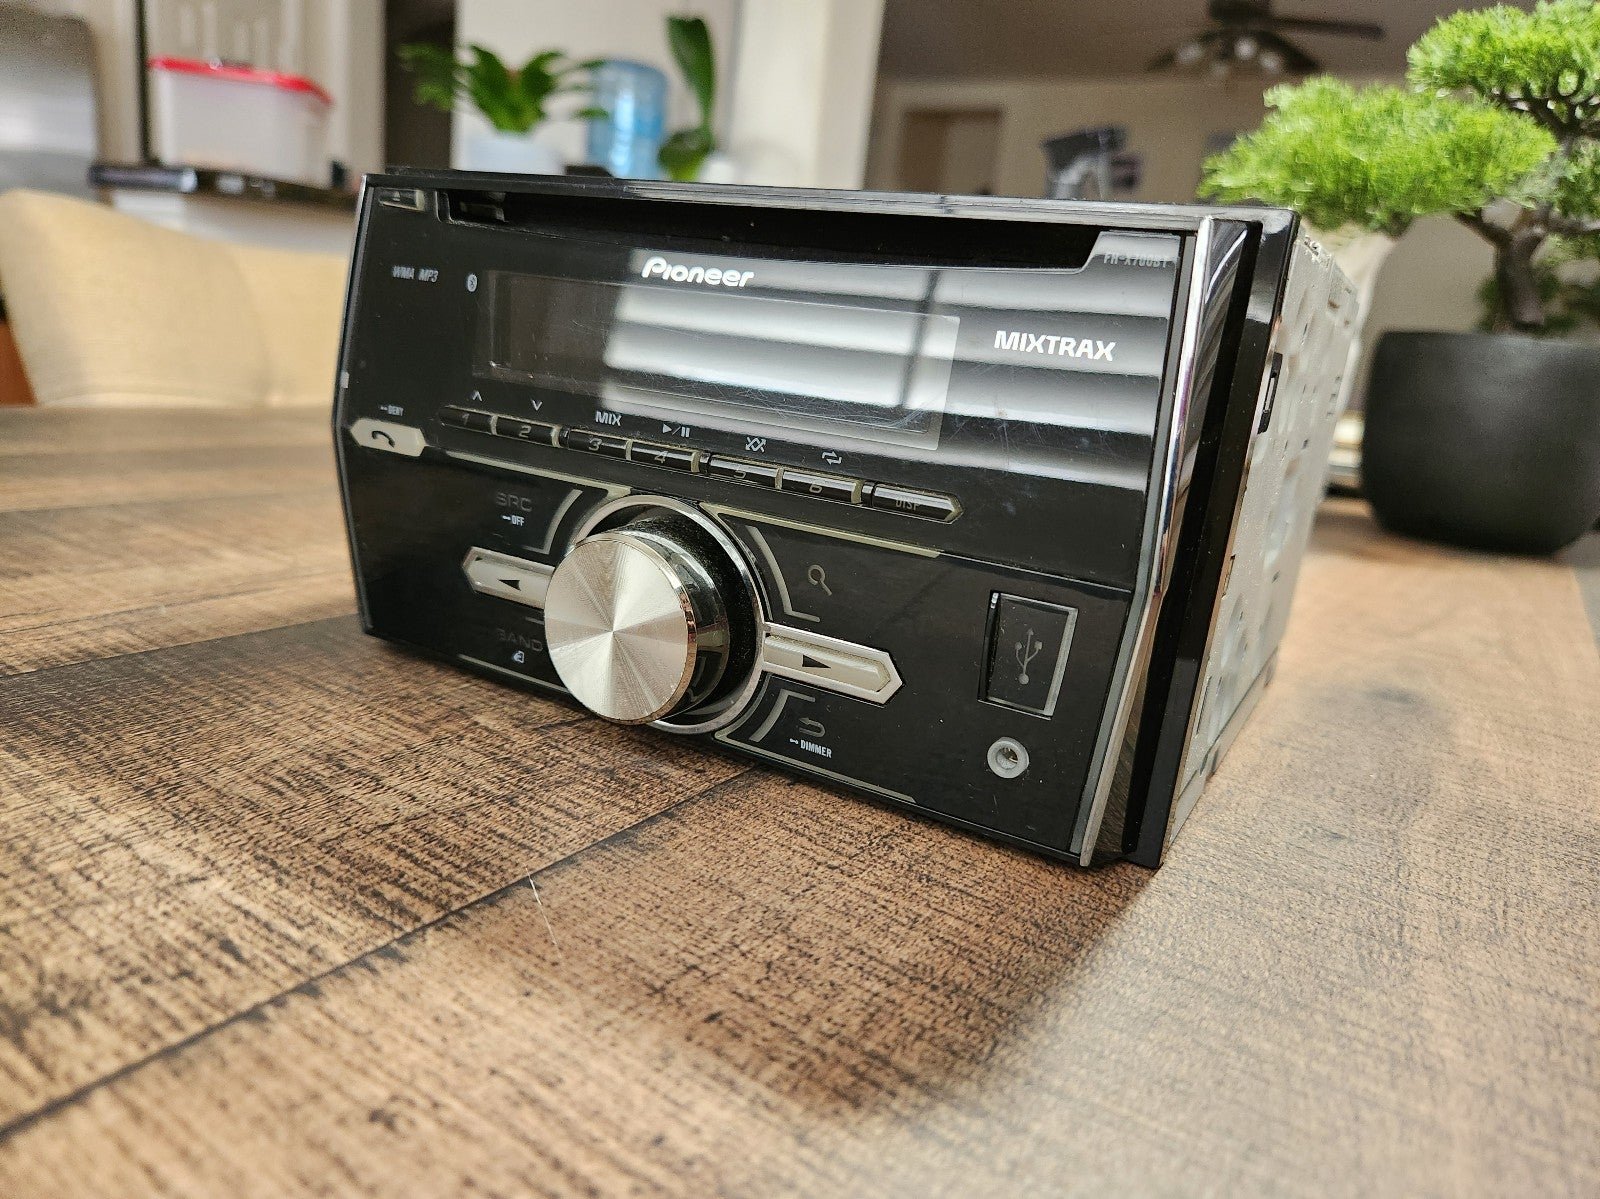 Pioneer Mixtrax FH-X700BT Car stereo GDNGVIE9V